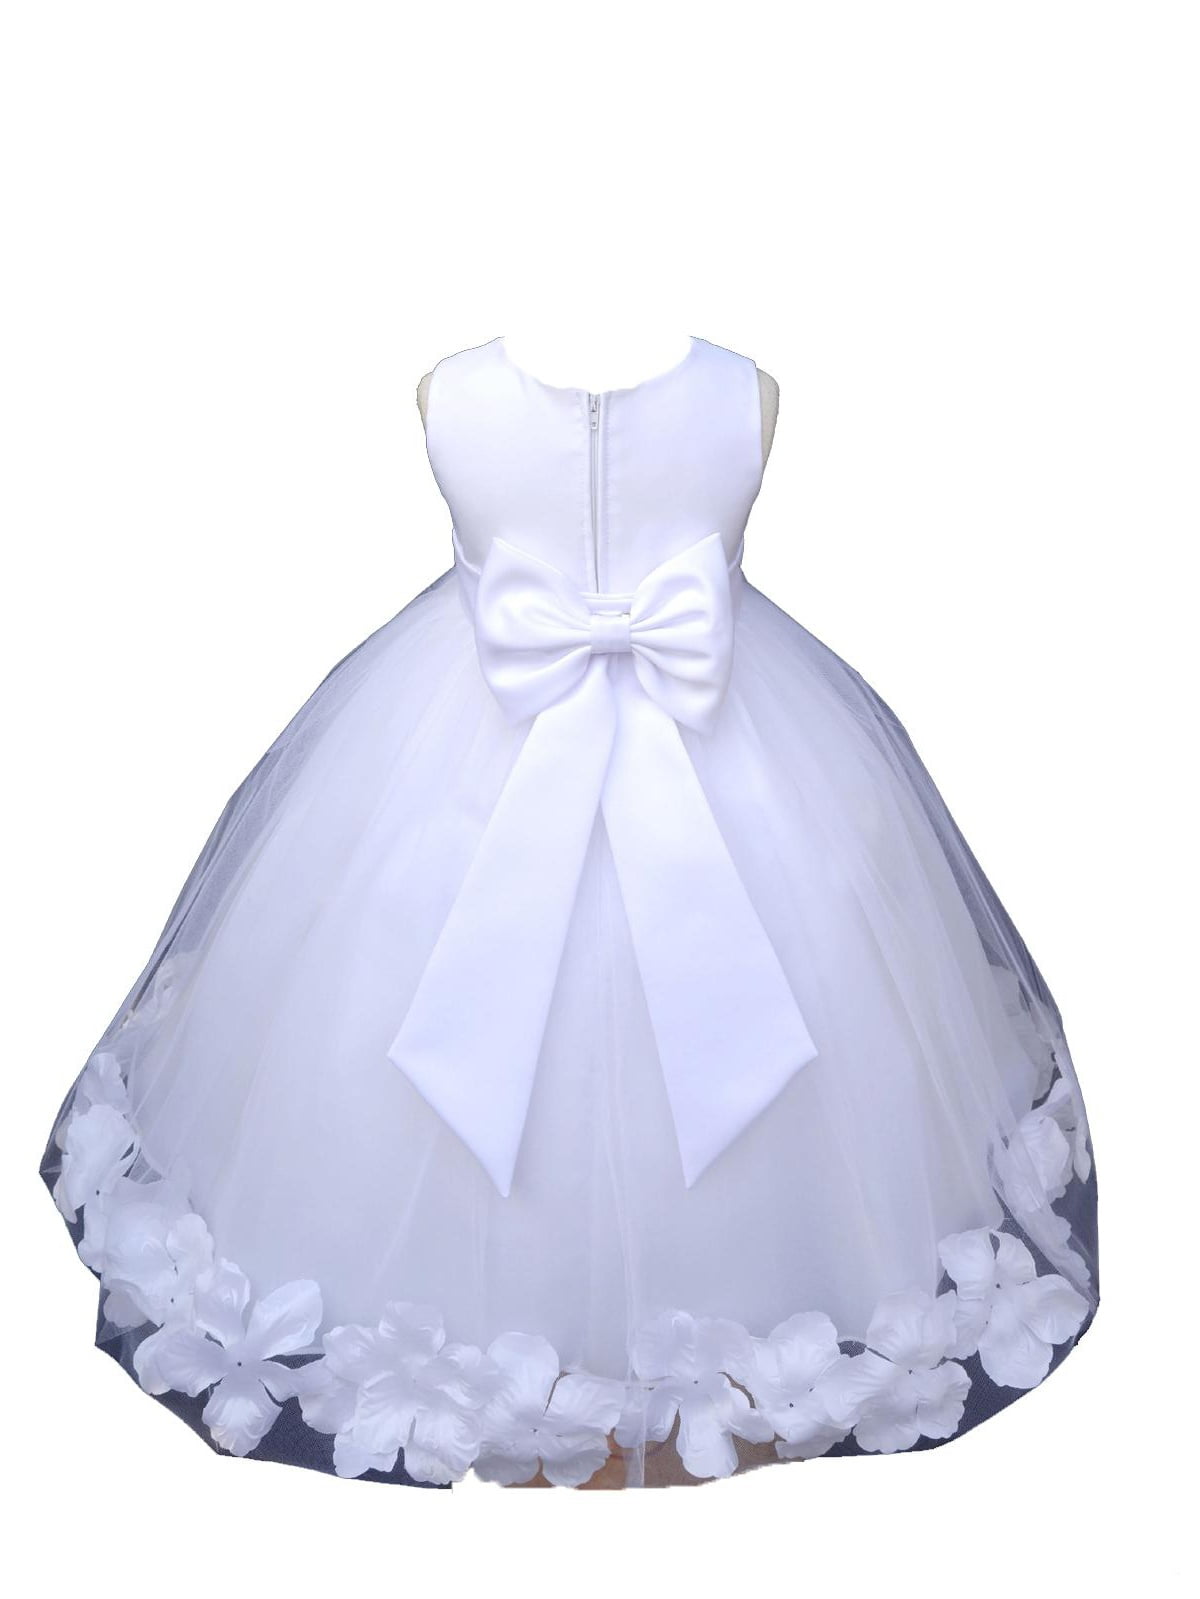 WHITE BABY FLOWER GIRL DRESS WEDDING PAGEANT TODDLER KIDS RECITAL 6-9M 12-18M 2